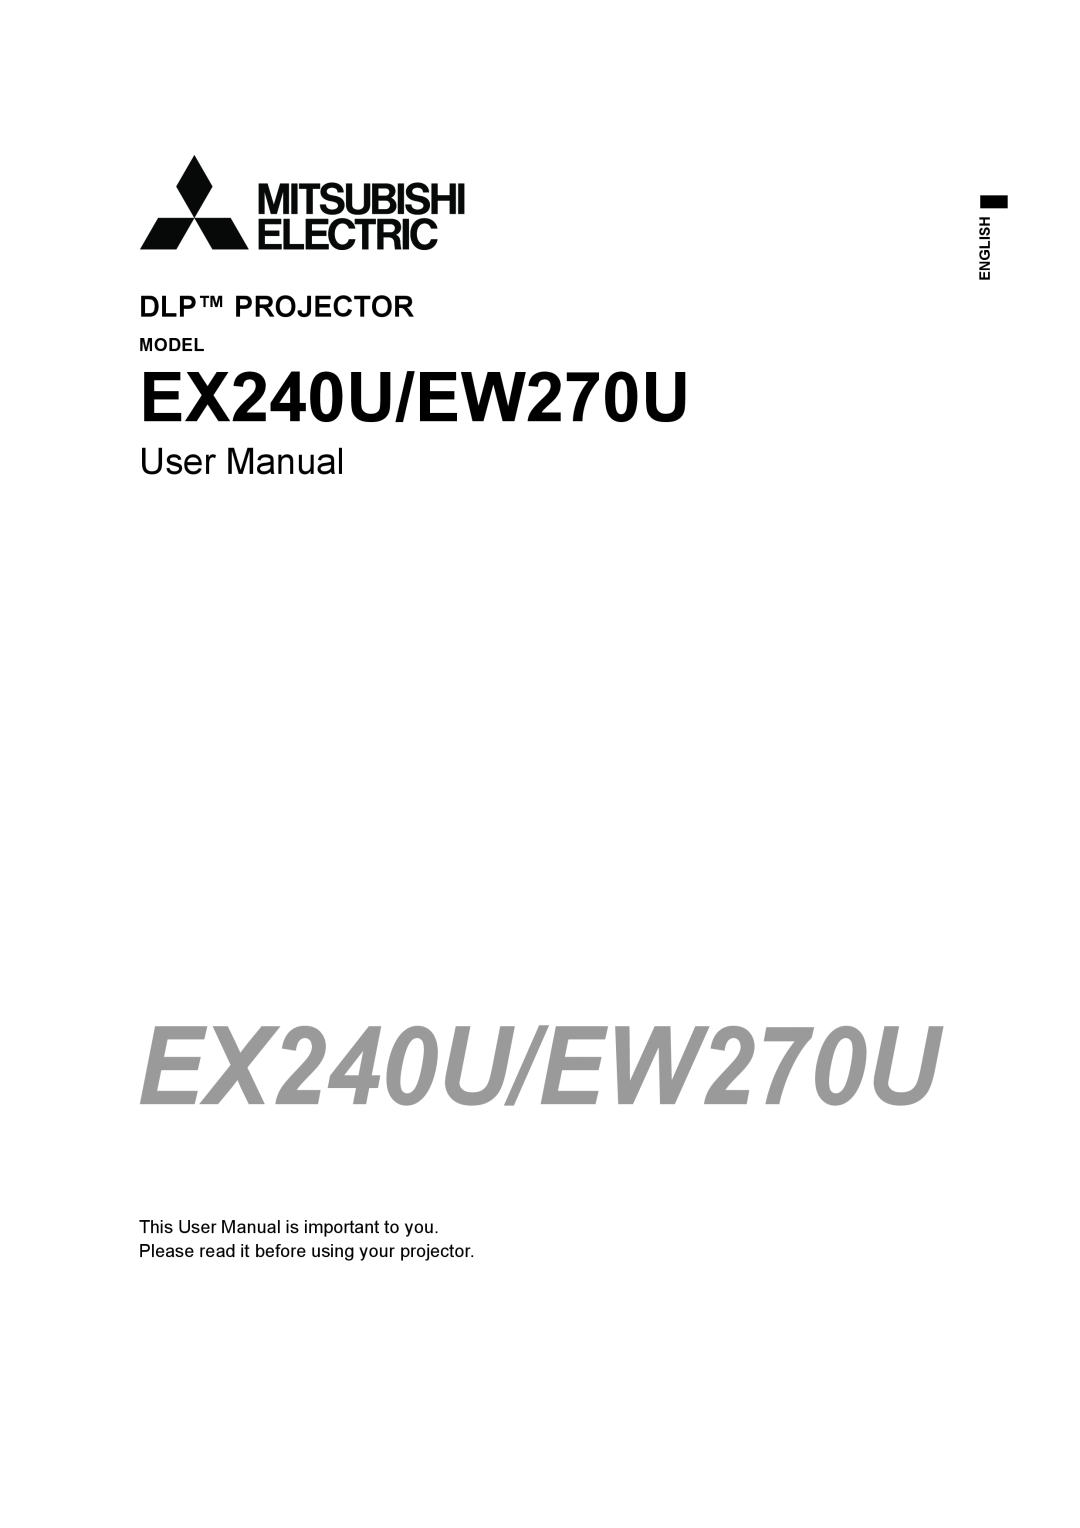 Mitsubishi Electronics user manual EX240U/EW270U, Dlp Projector 